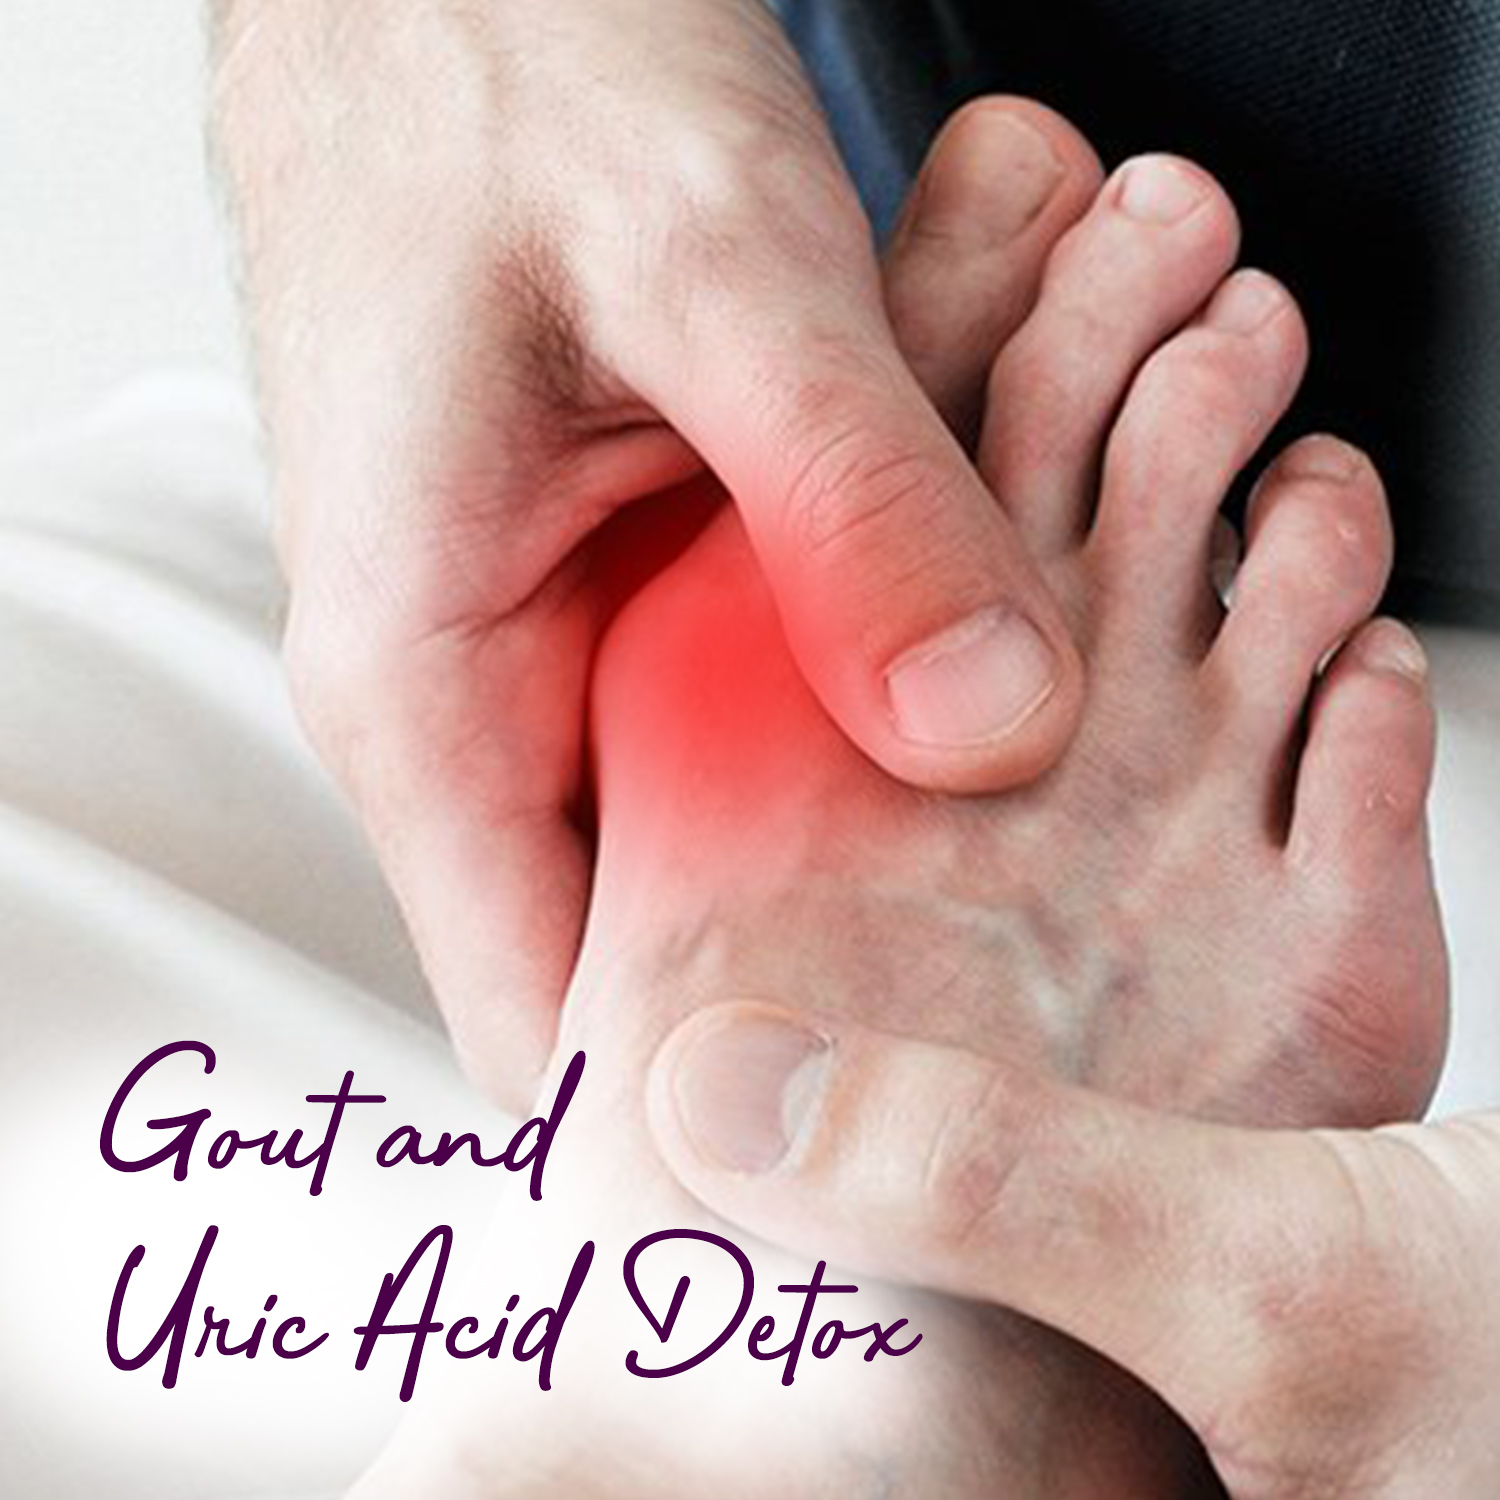 gout and uric acid detox